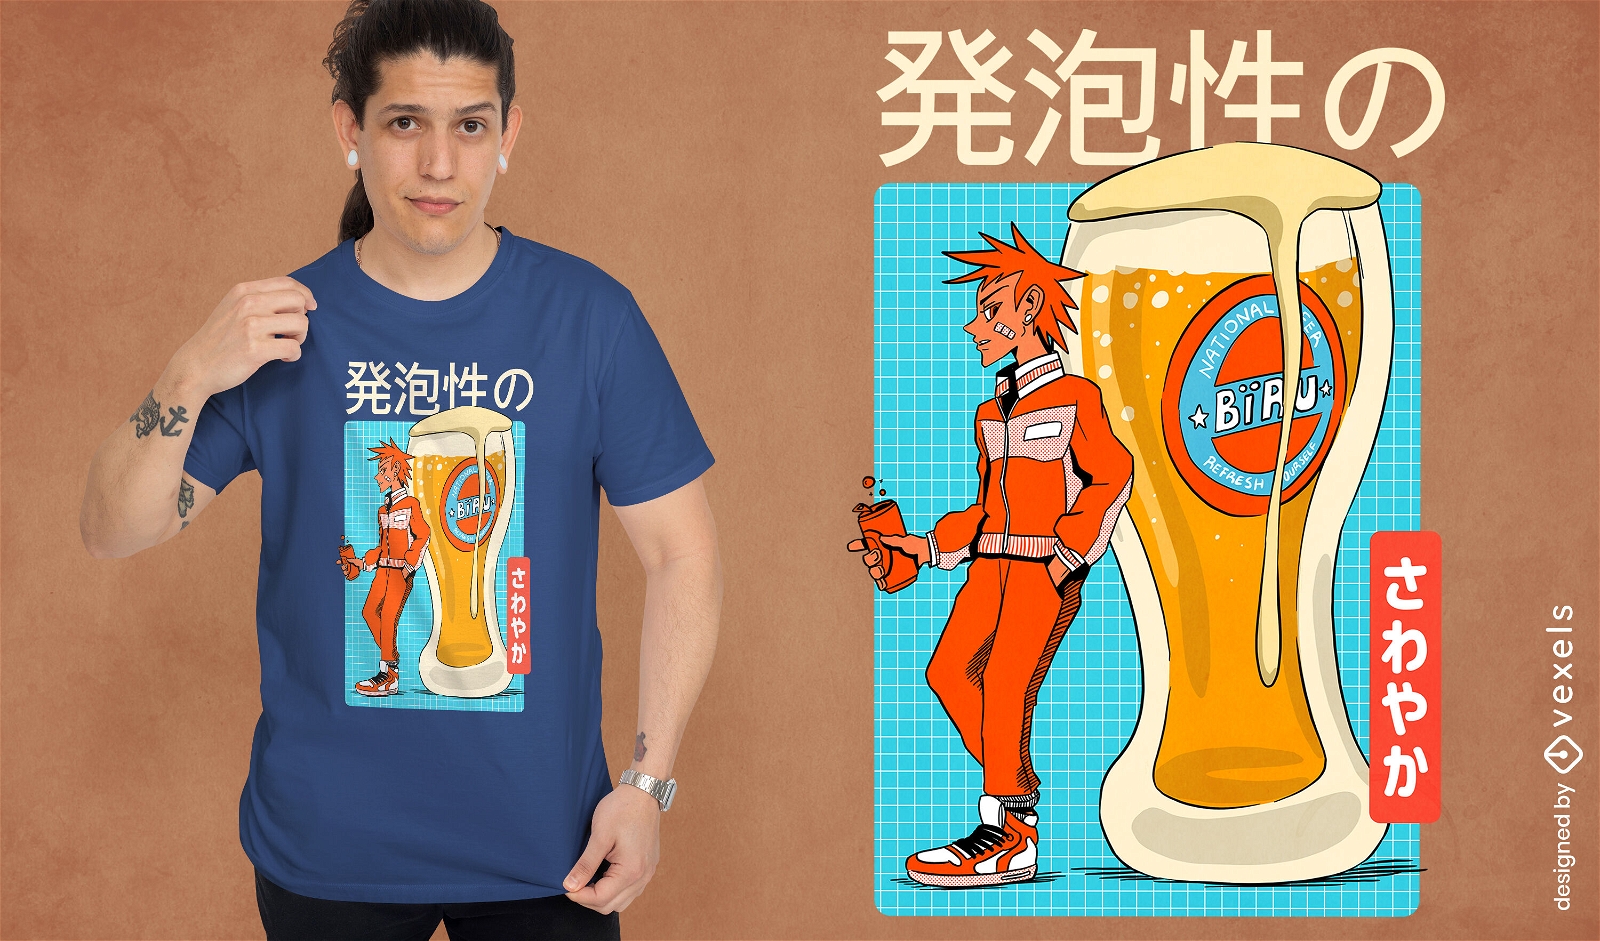 Anime beer t-shirt design